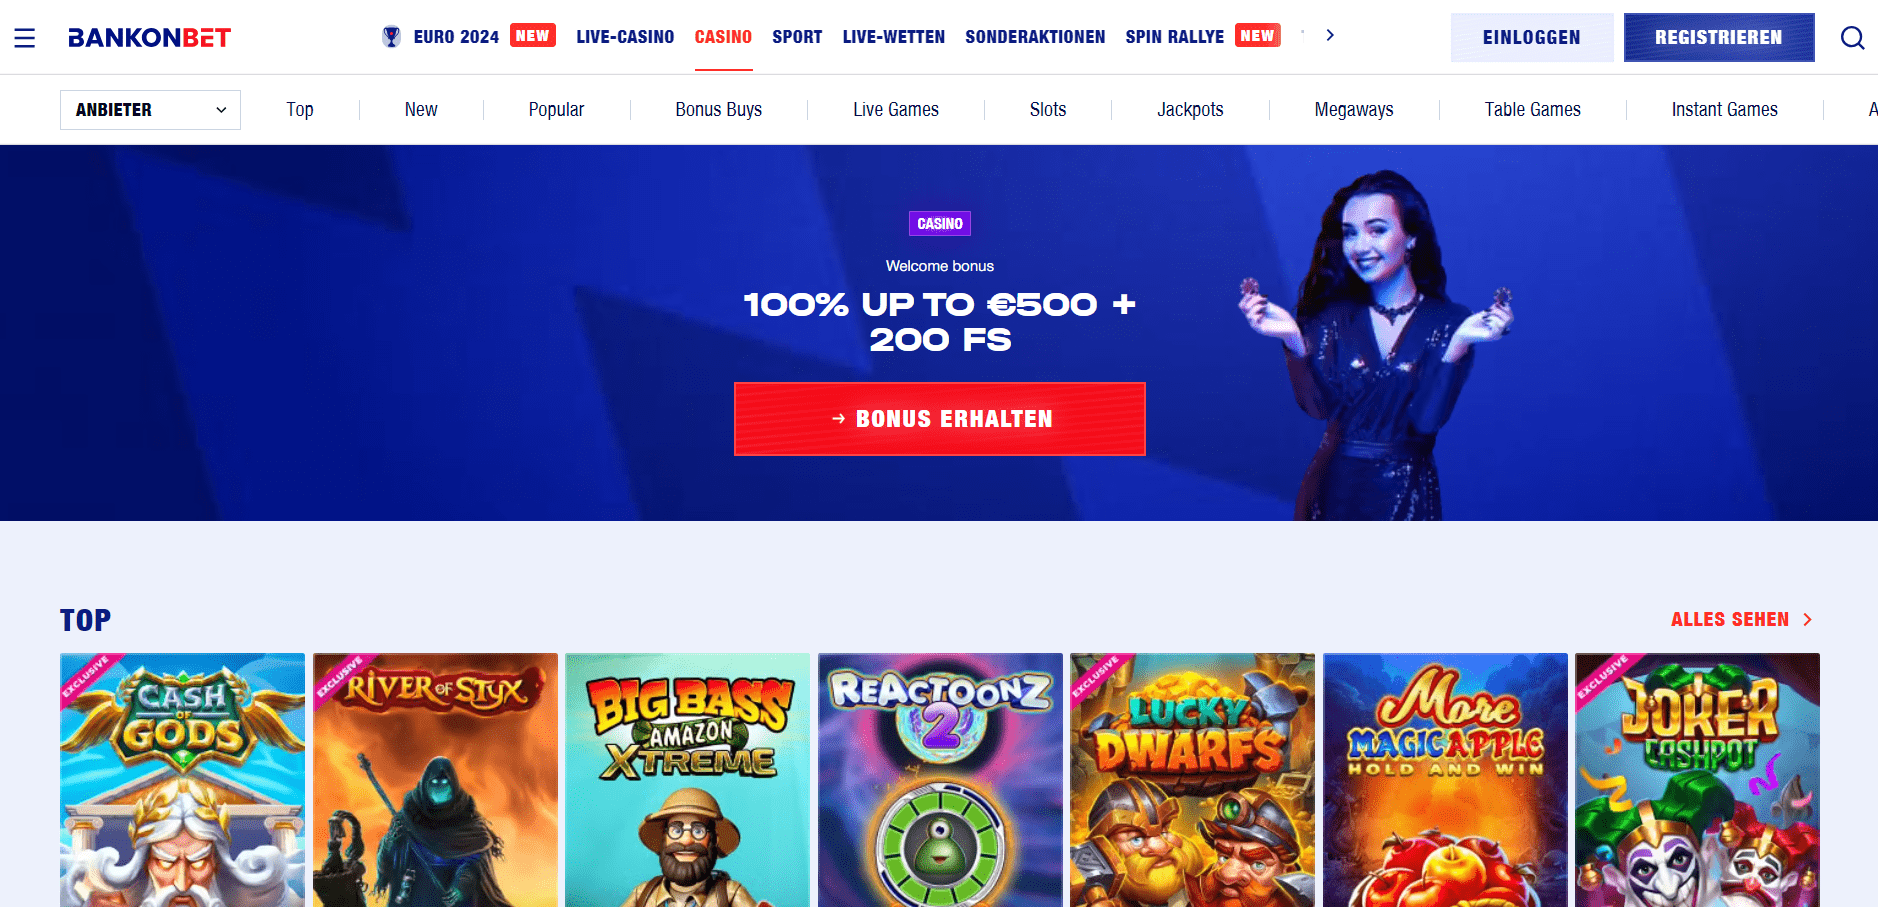 Bankonbet Casino Homepage